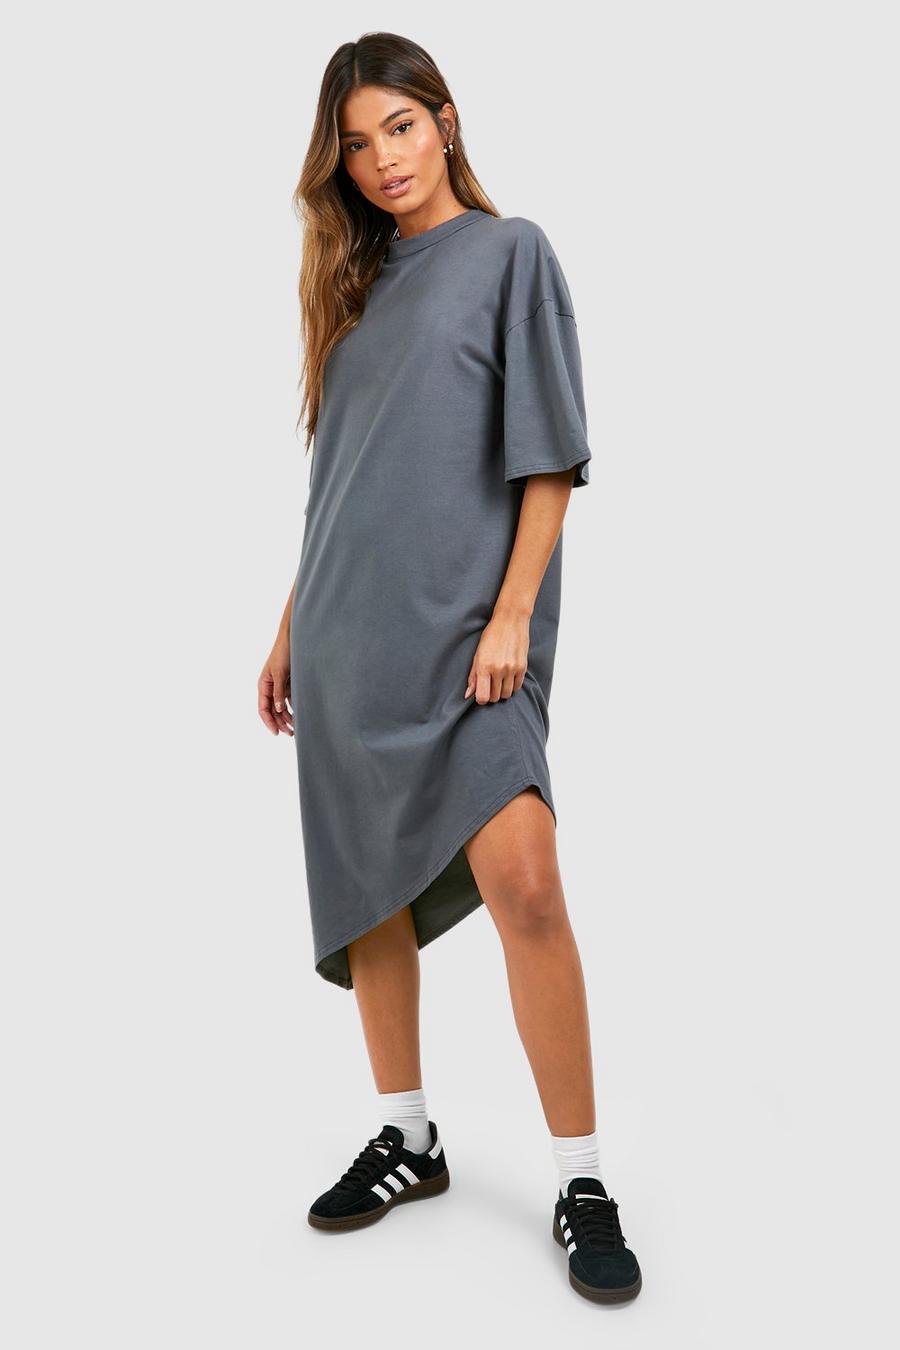 Charcoal grey Assymetric Hem Cotton Midaxi T-shirt Dress